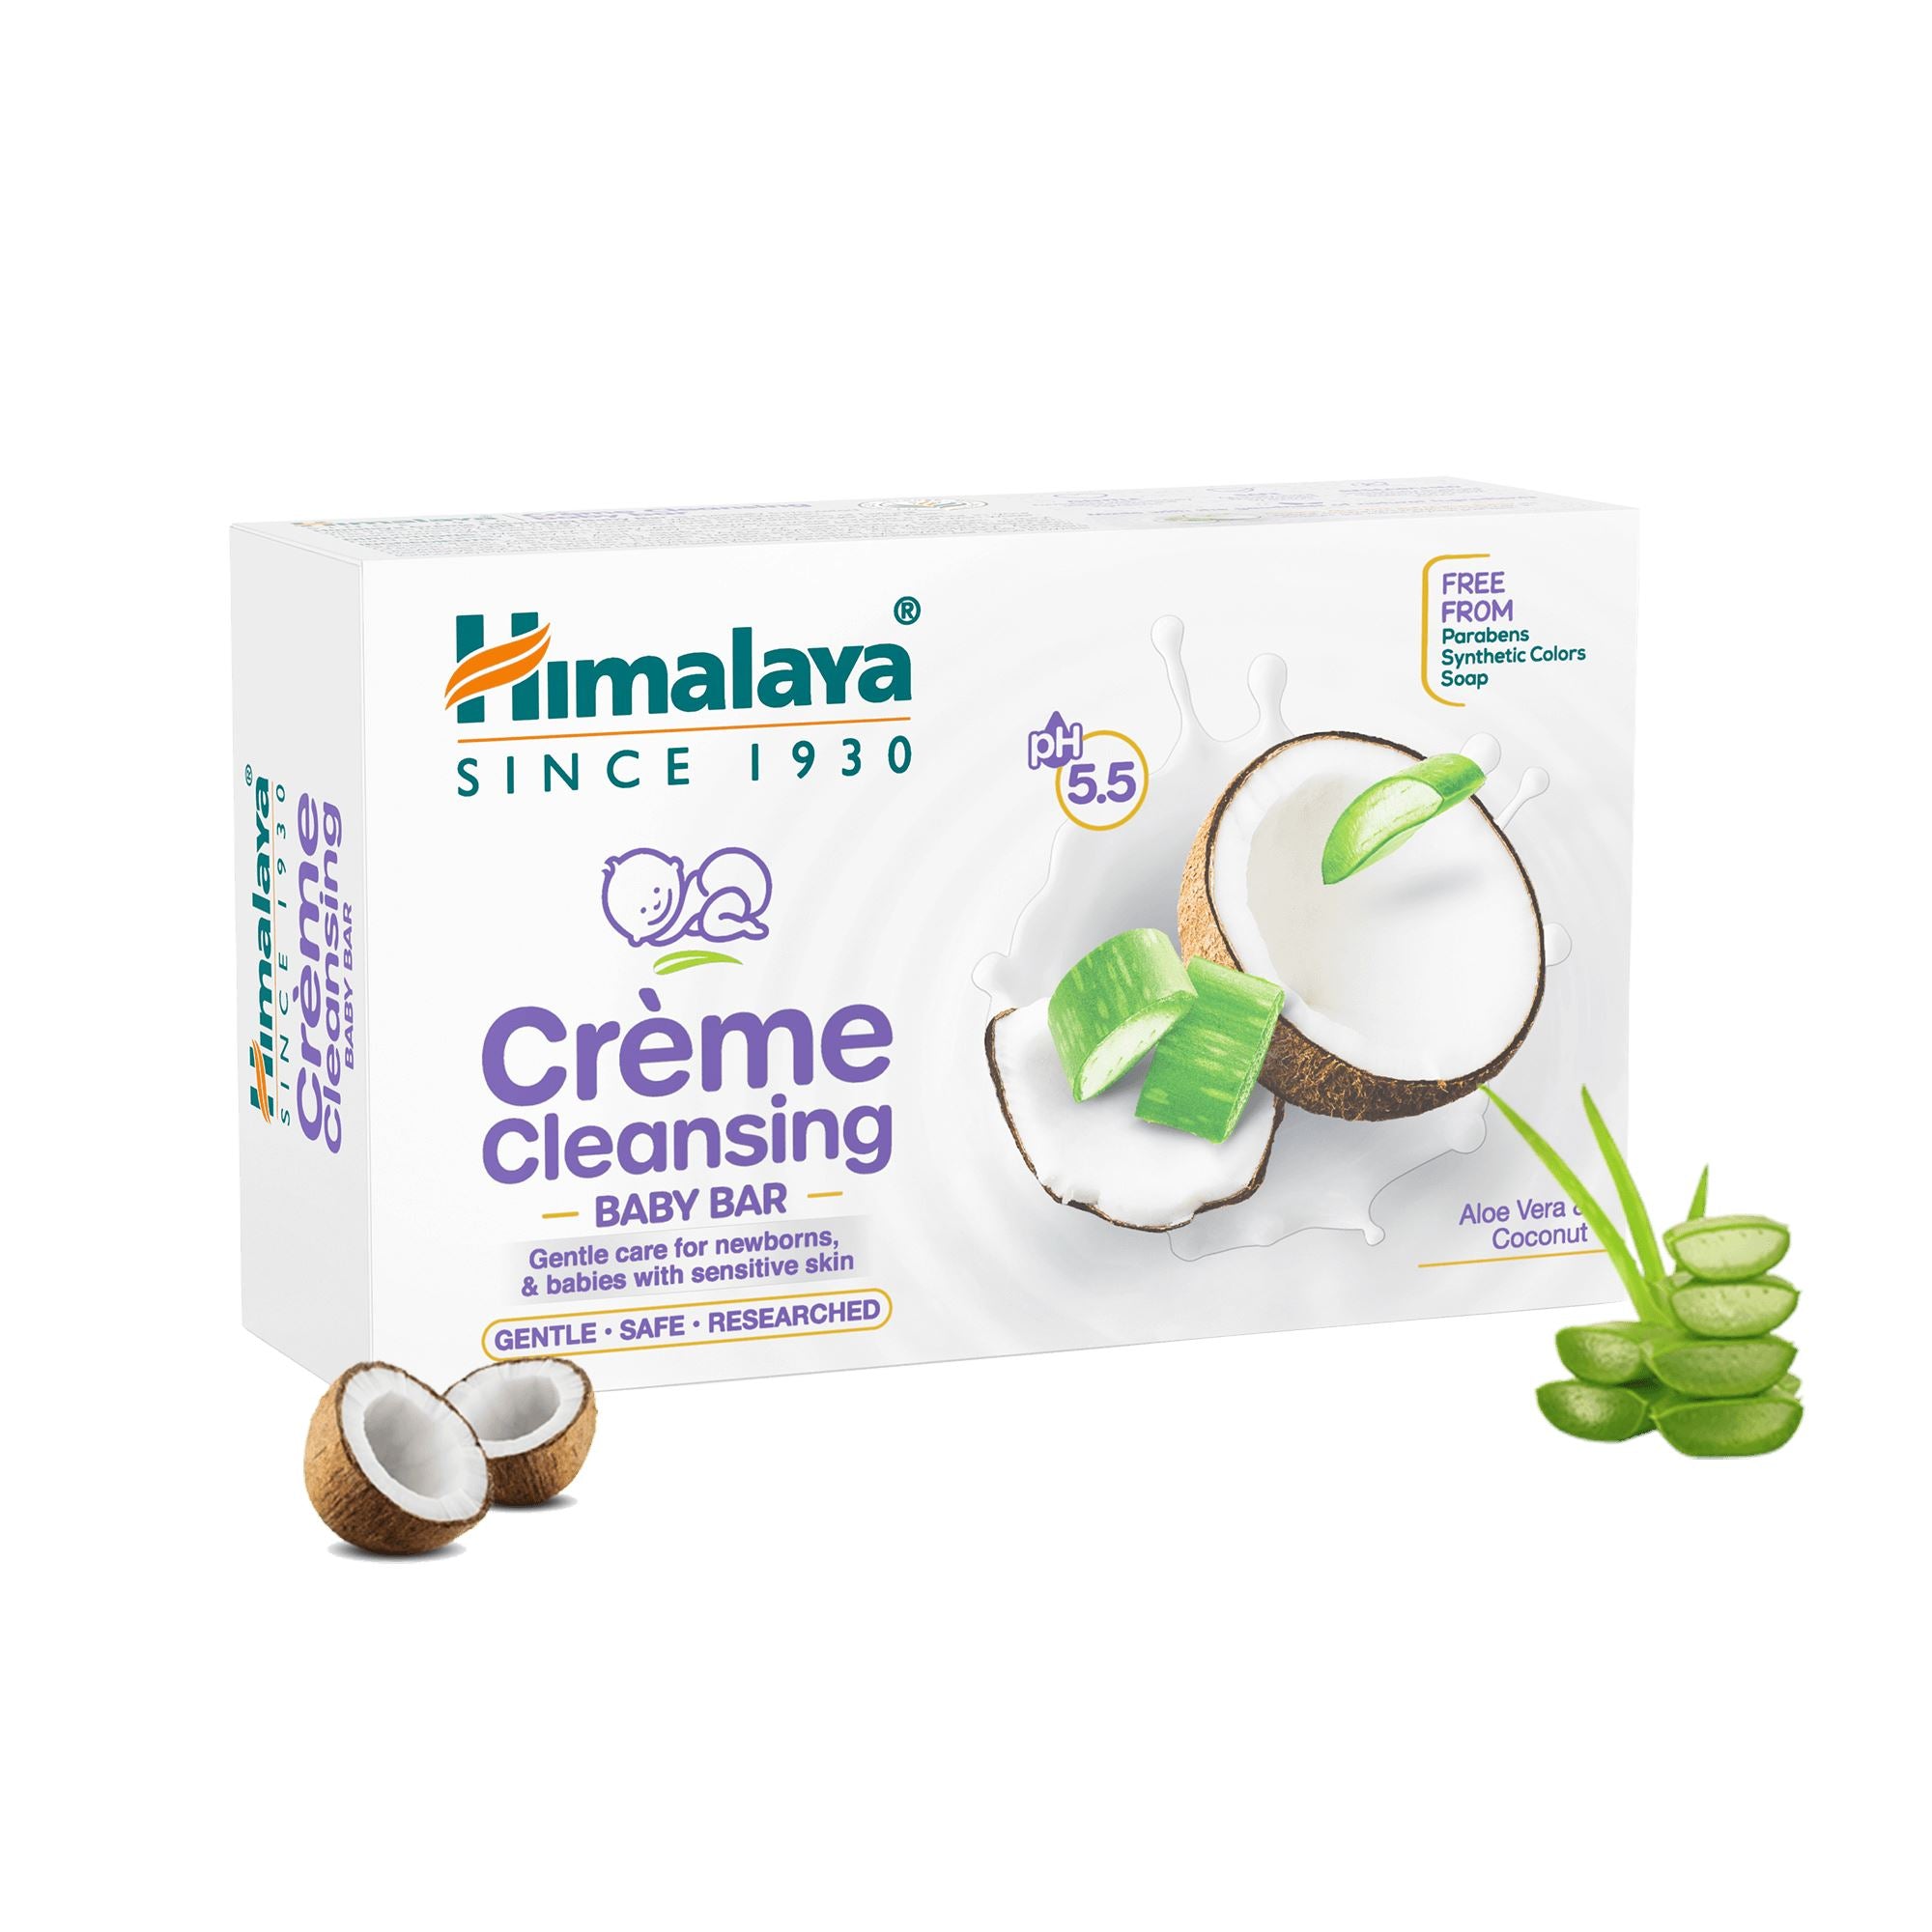  Himalaya Crème Cleansing Baby Bar